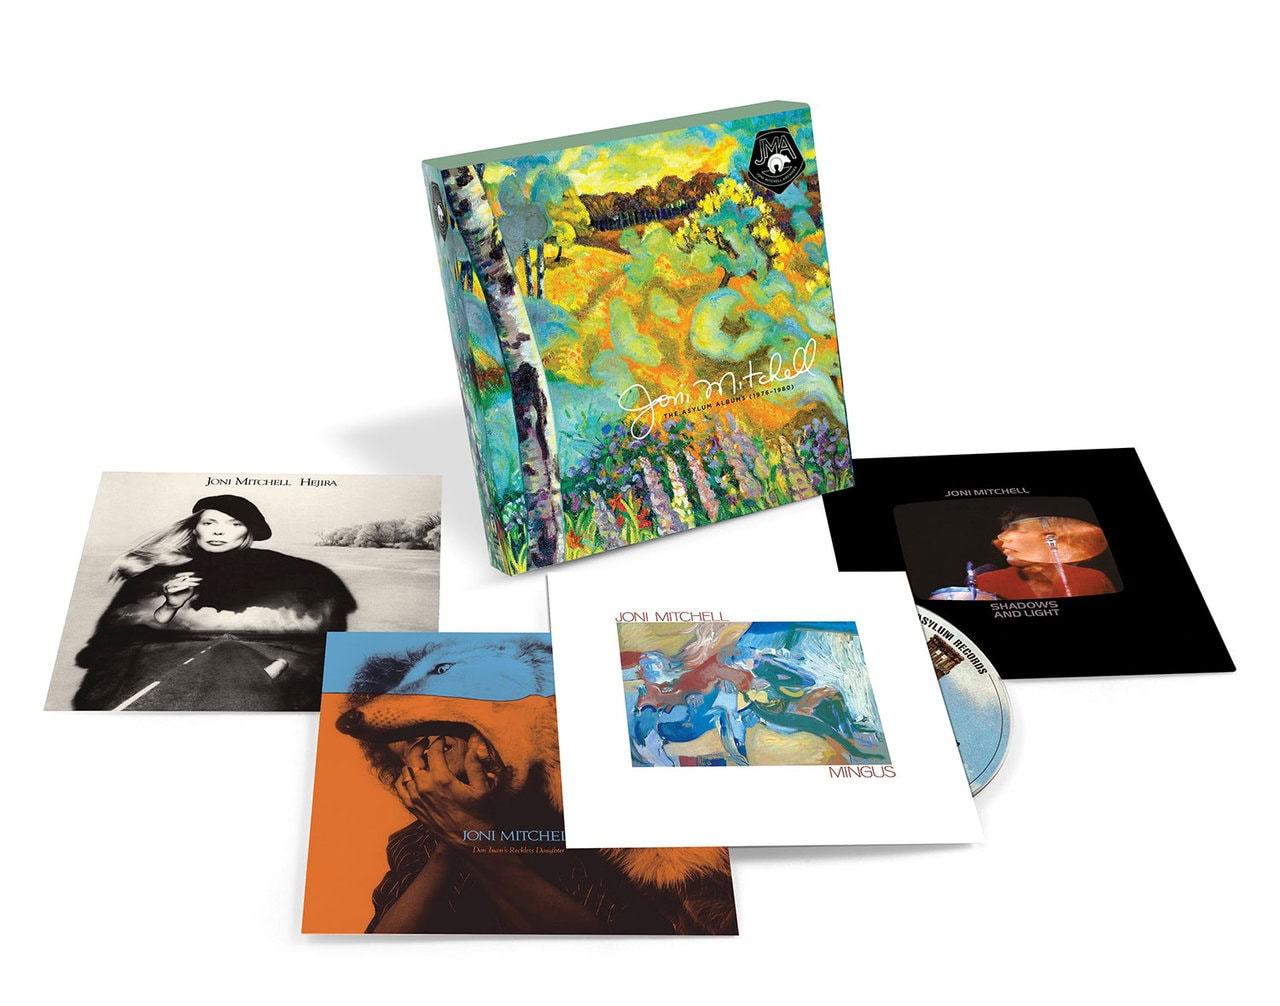 Joni Mitchell The Asylum Albums (1976-1980)